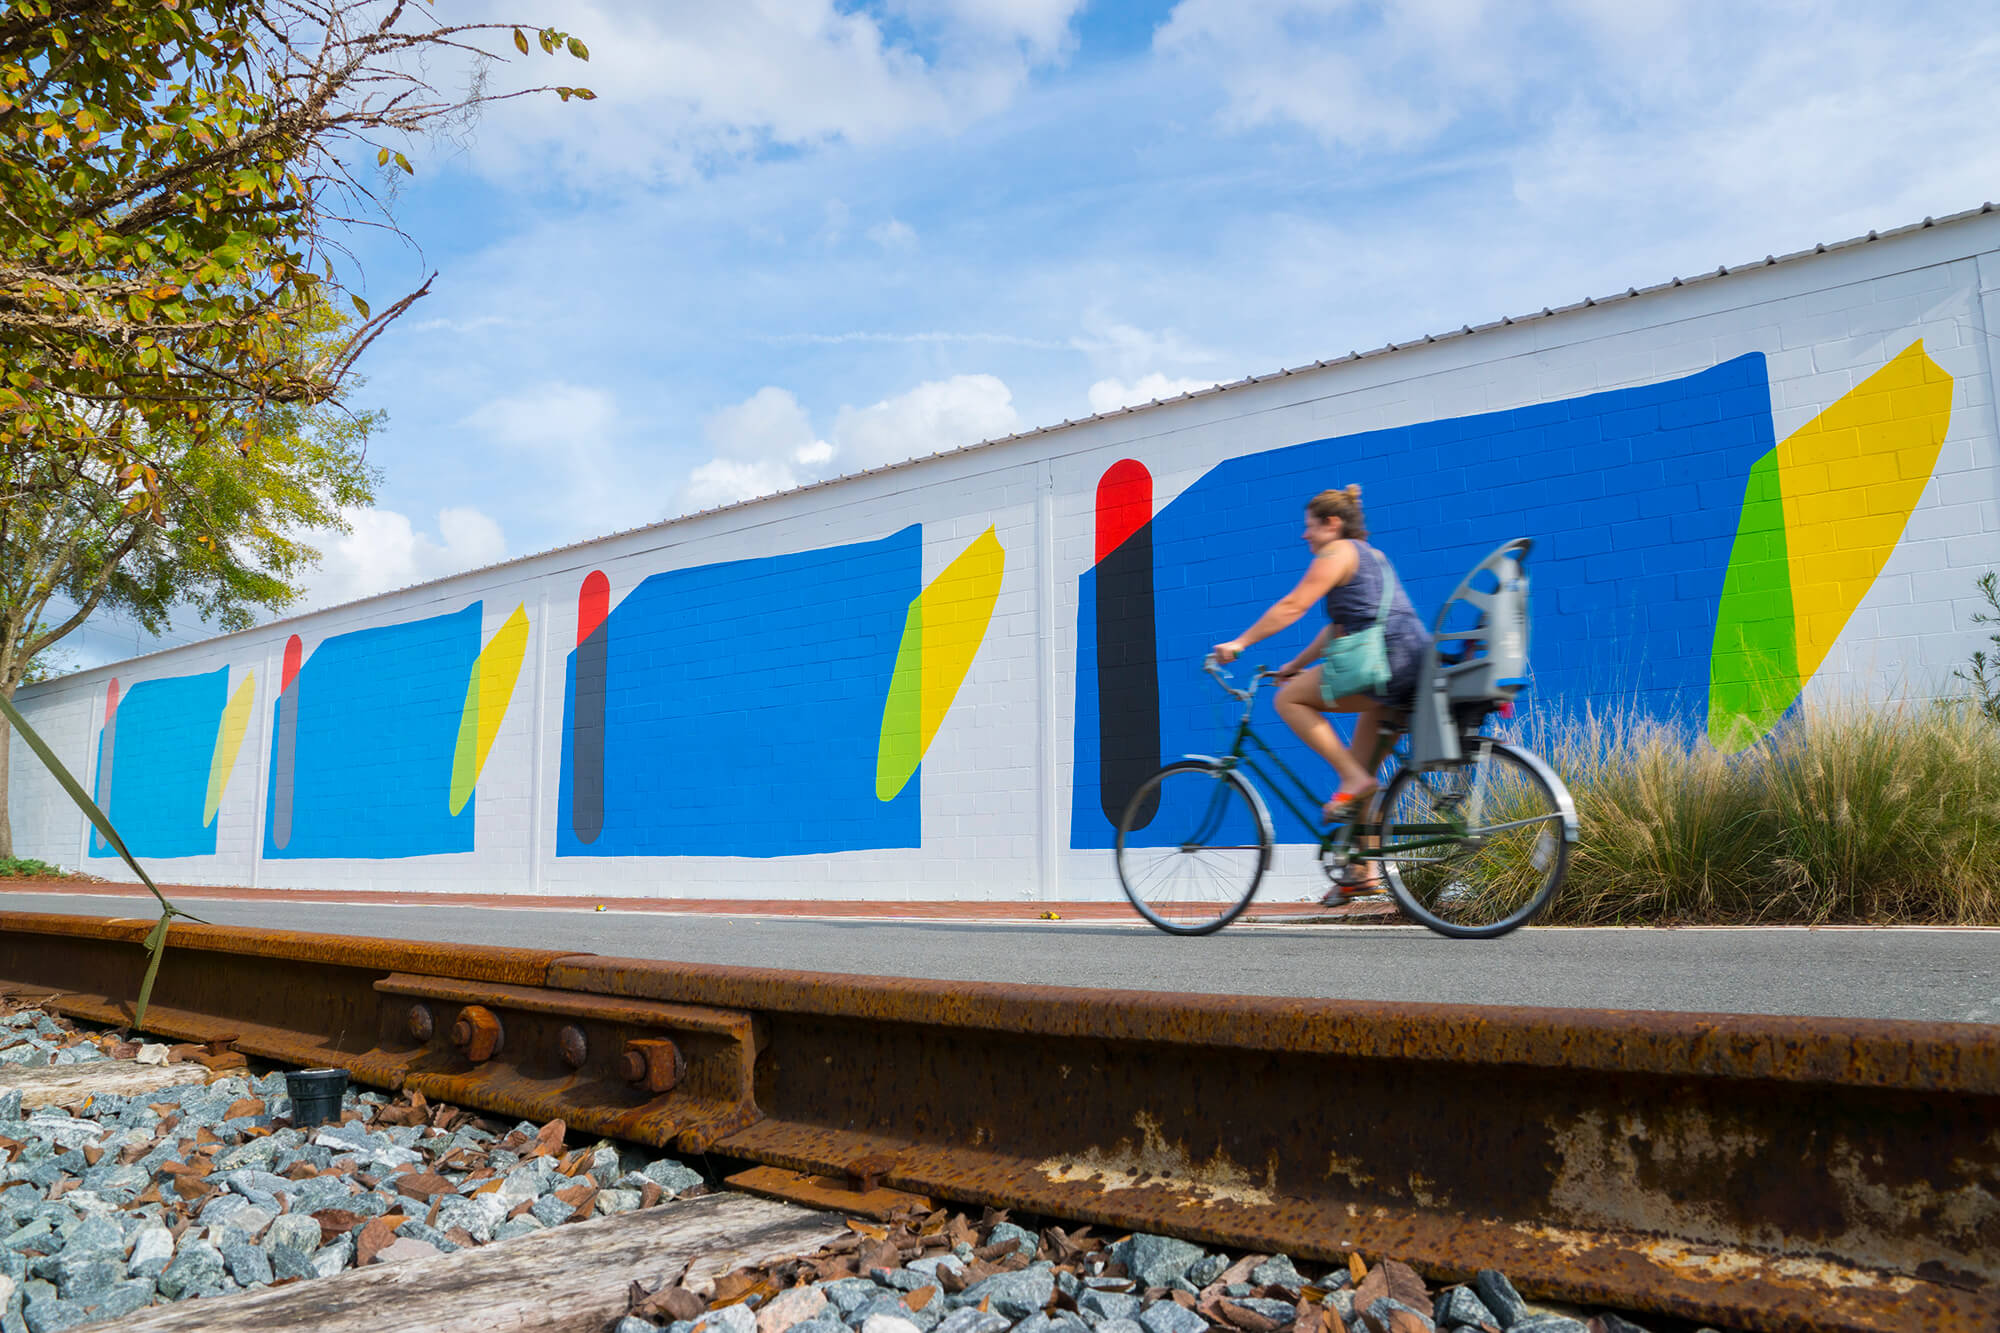 352walls, The Gainesville Urban Art Initiative, Florida – Part 1